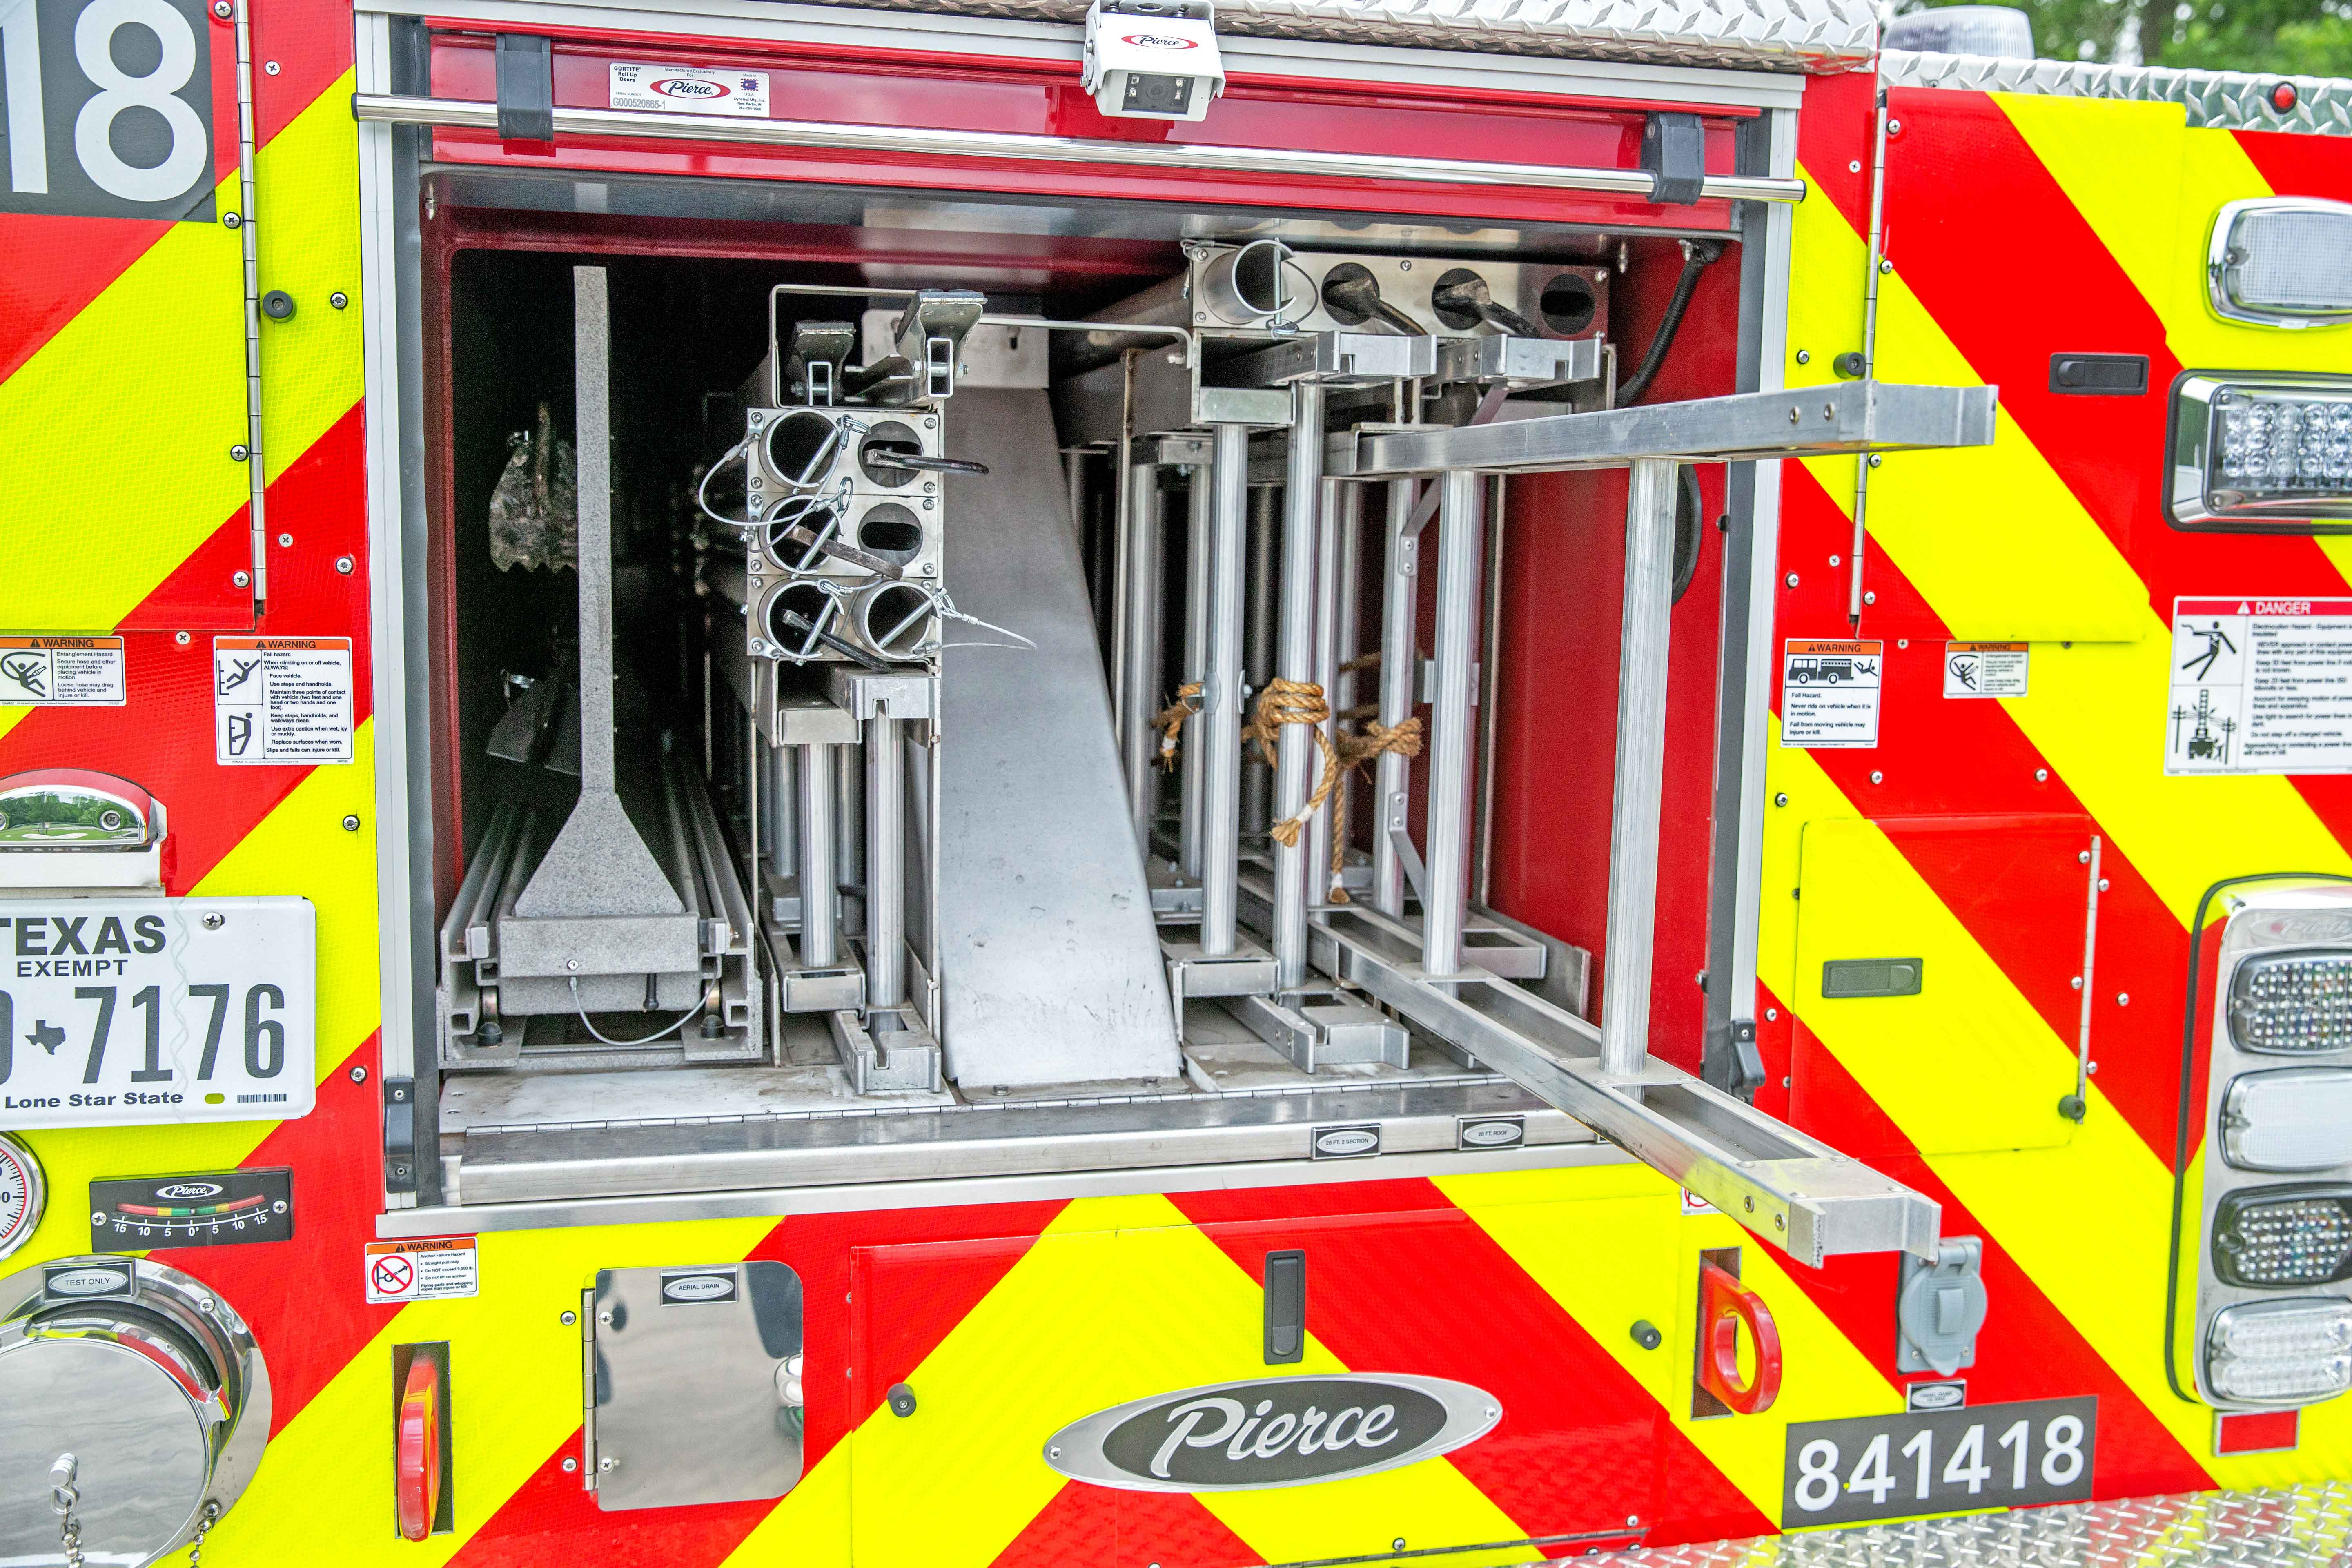 San Antonio Fire Department Velocity 100'Heavy-Duty Aluminum Platform